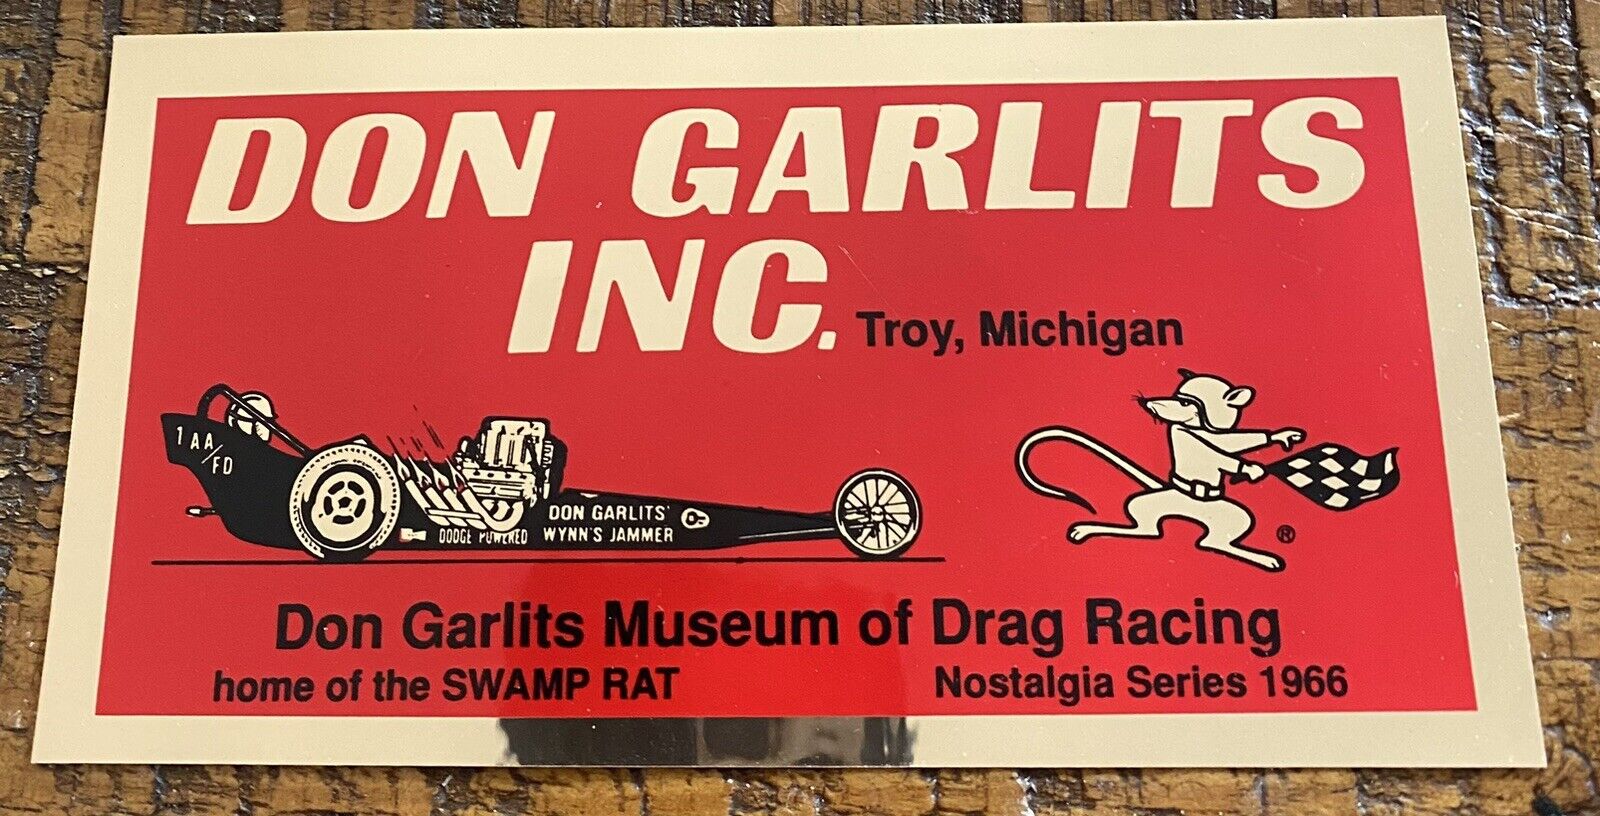 Vintage Nhra Drag Racing Sticker Don Garlics